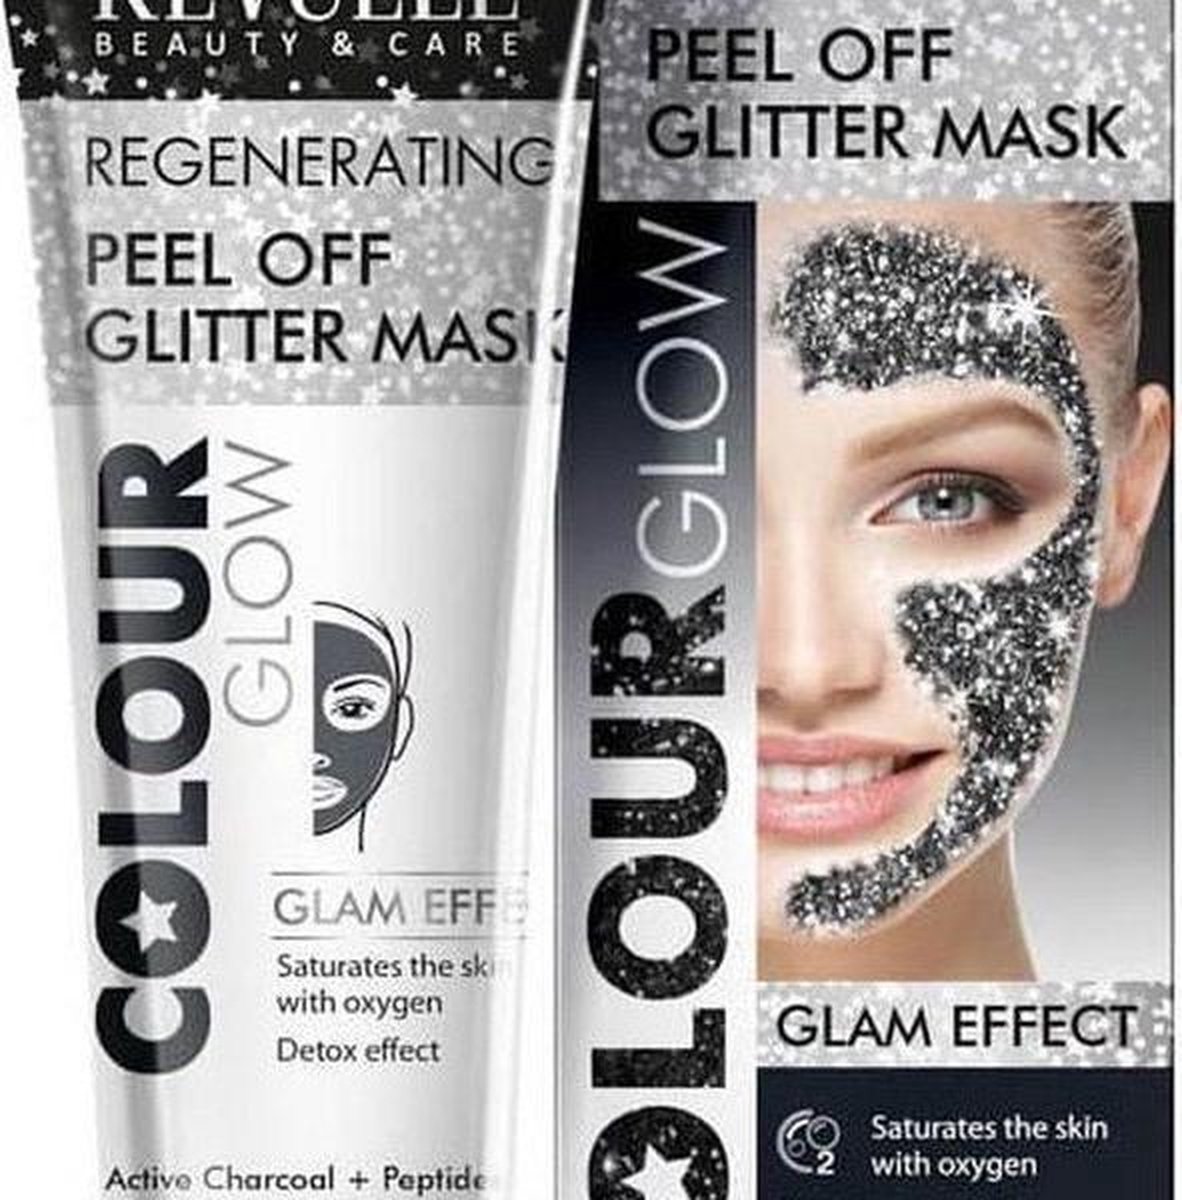 Revuele Peel Off Glitter Mask - Black (Regenerating) 80ml. | bol.com